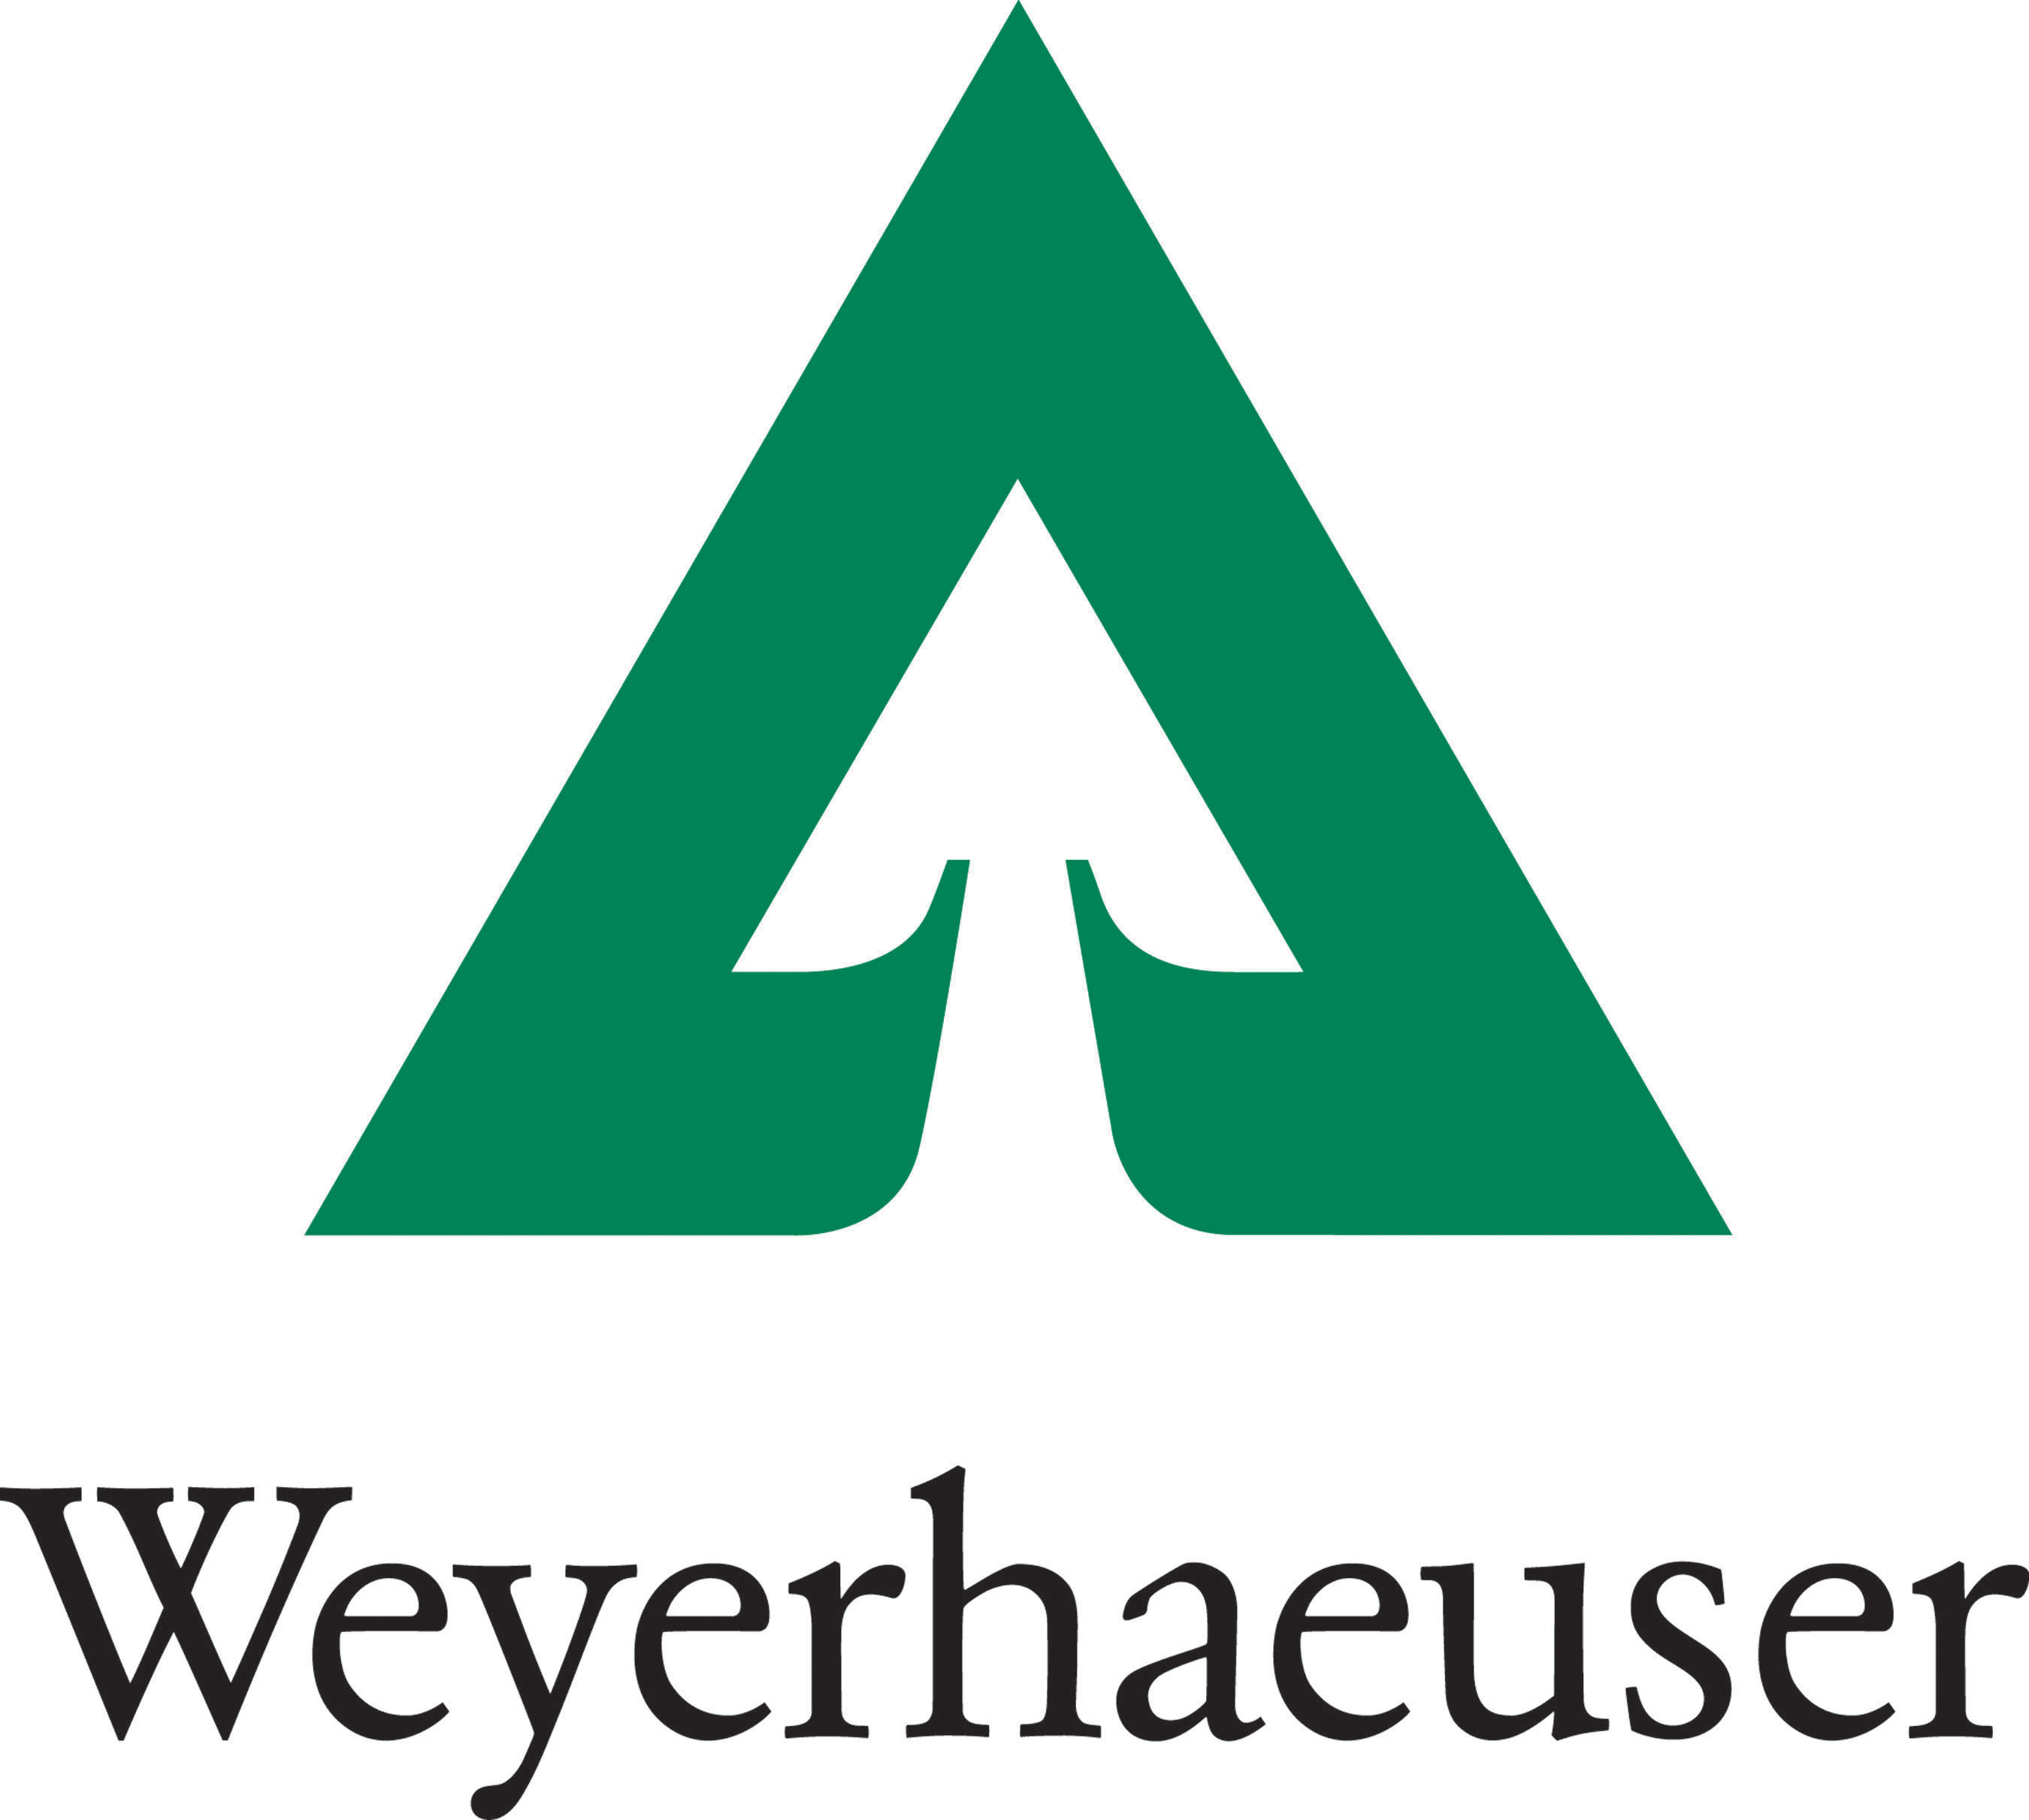 Weyerhaeuser Company logo. (PRNewsFoto/Weyerhaeuser Company) (PRNewsFoto/)